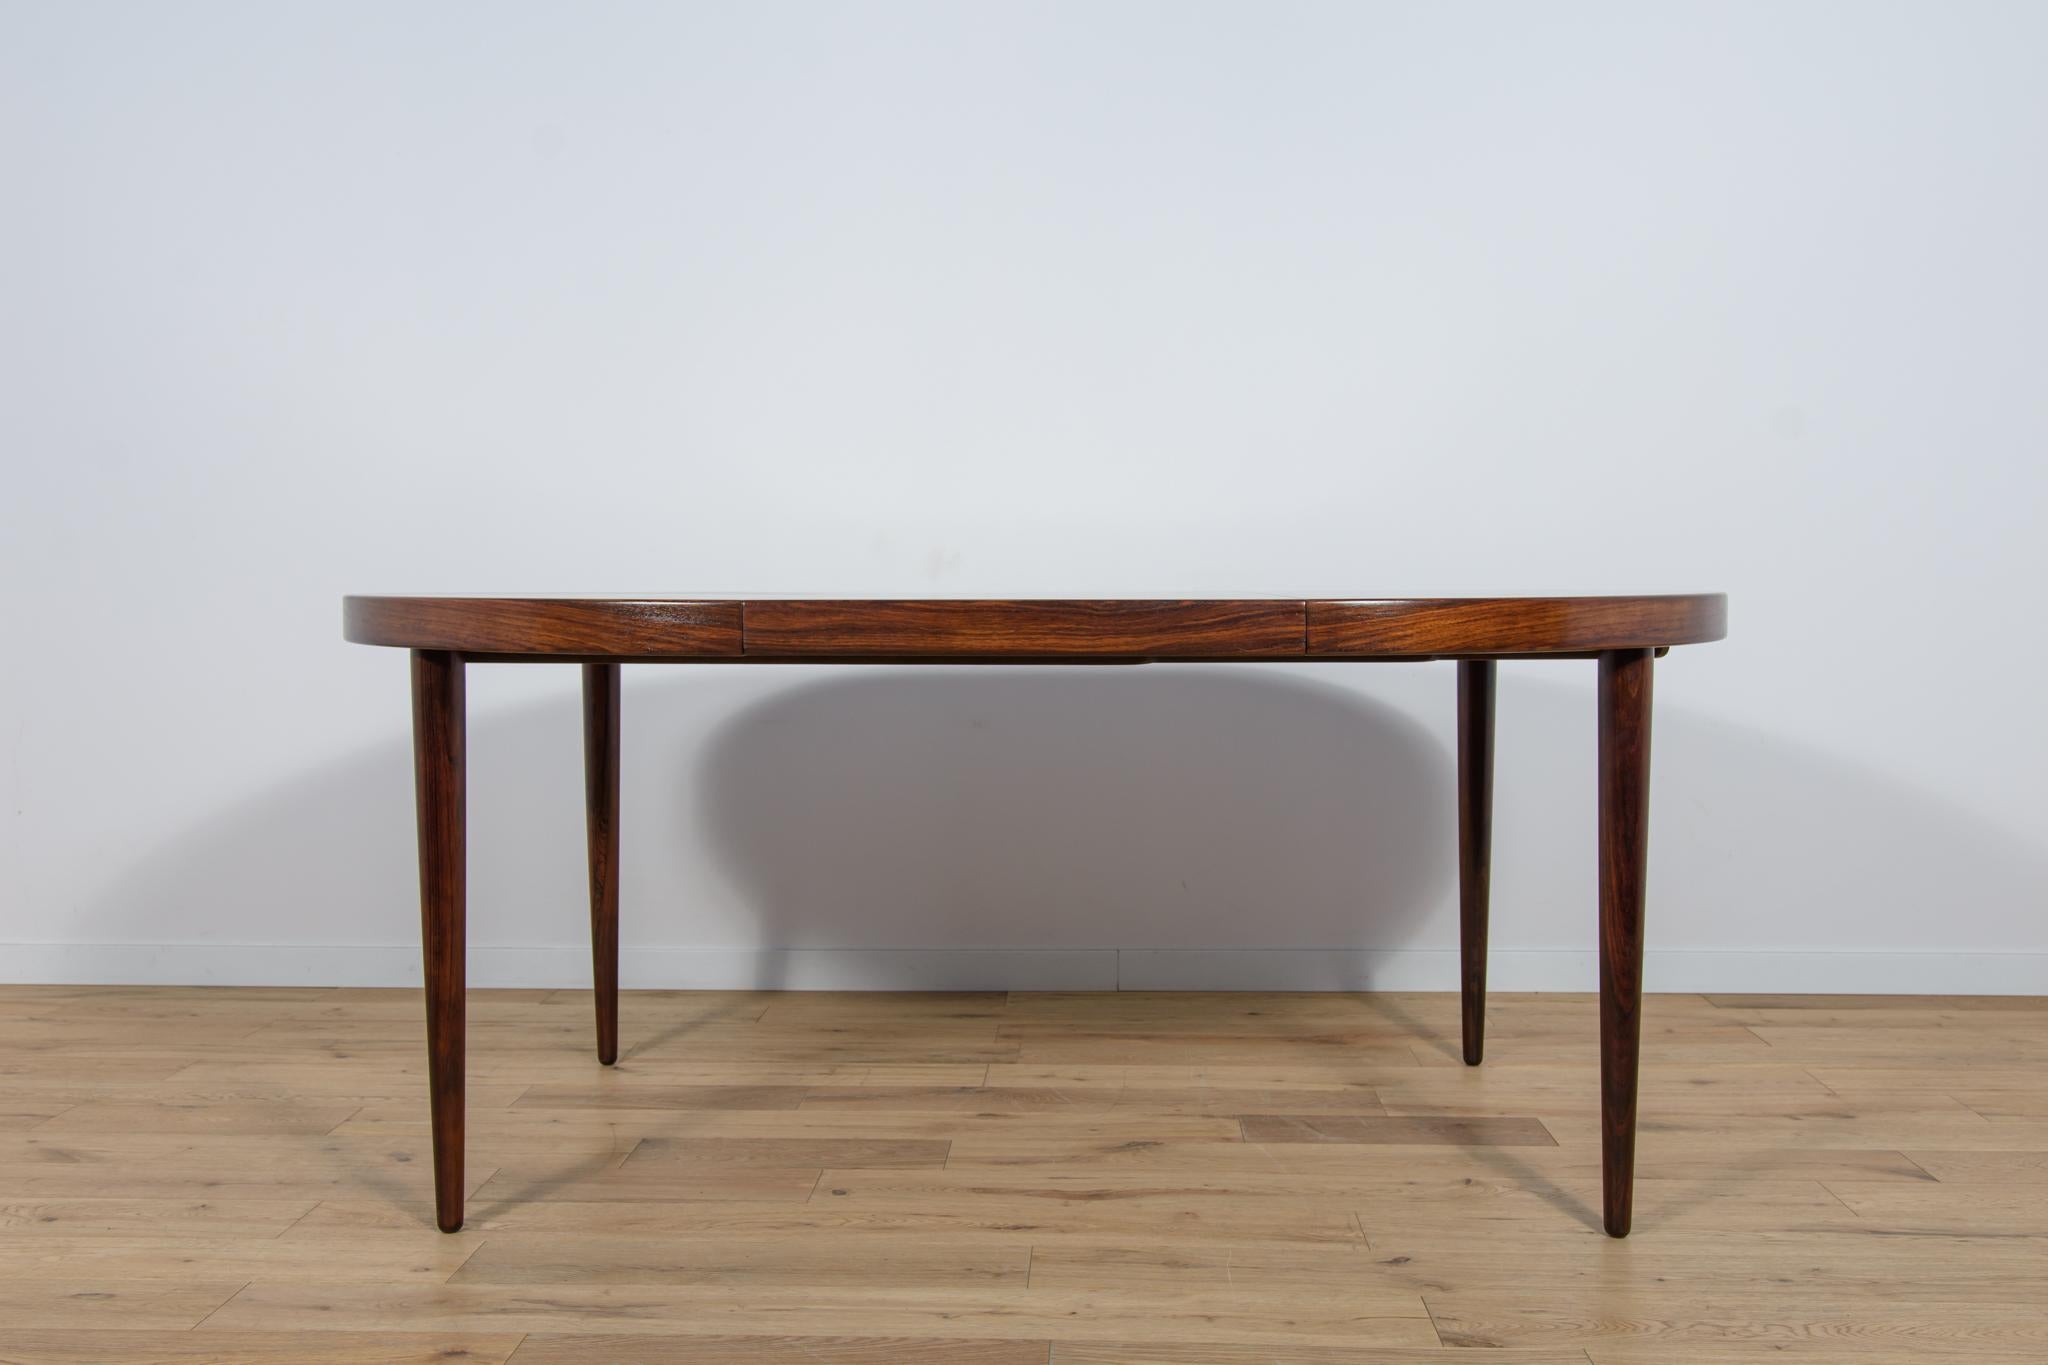  Mid-Century Extendable Rosewood Dining Table by Kai Kristiansen for Feldballes  For Sale 1